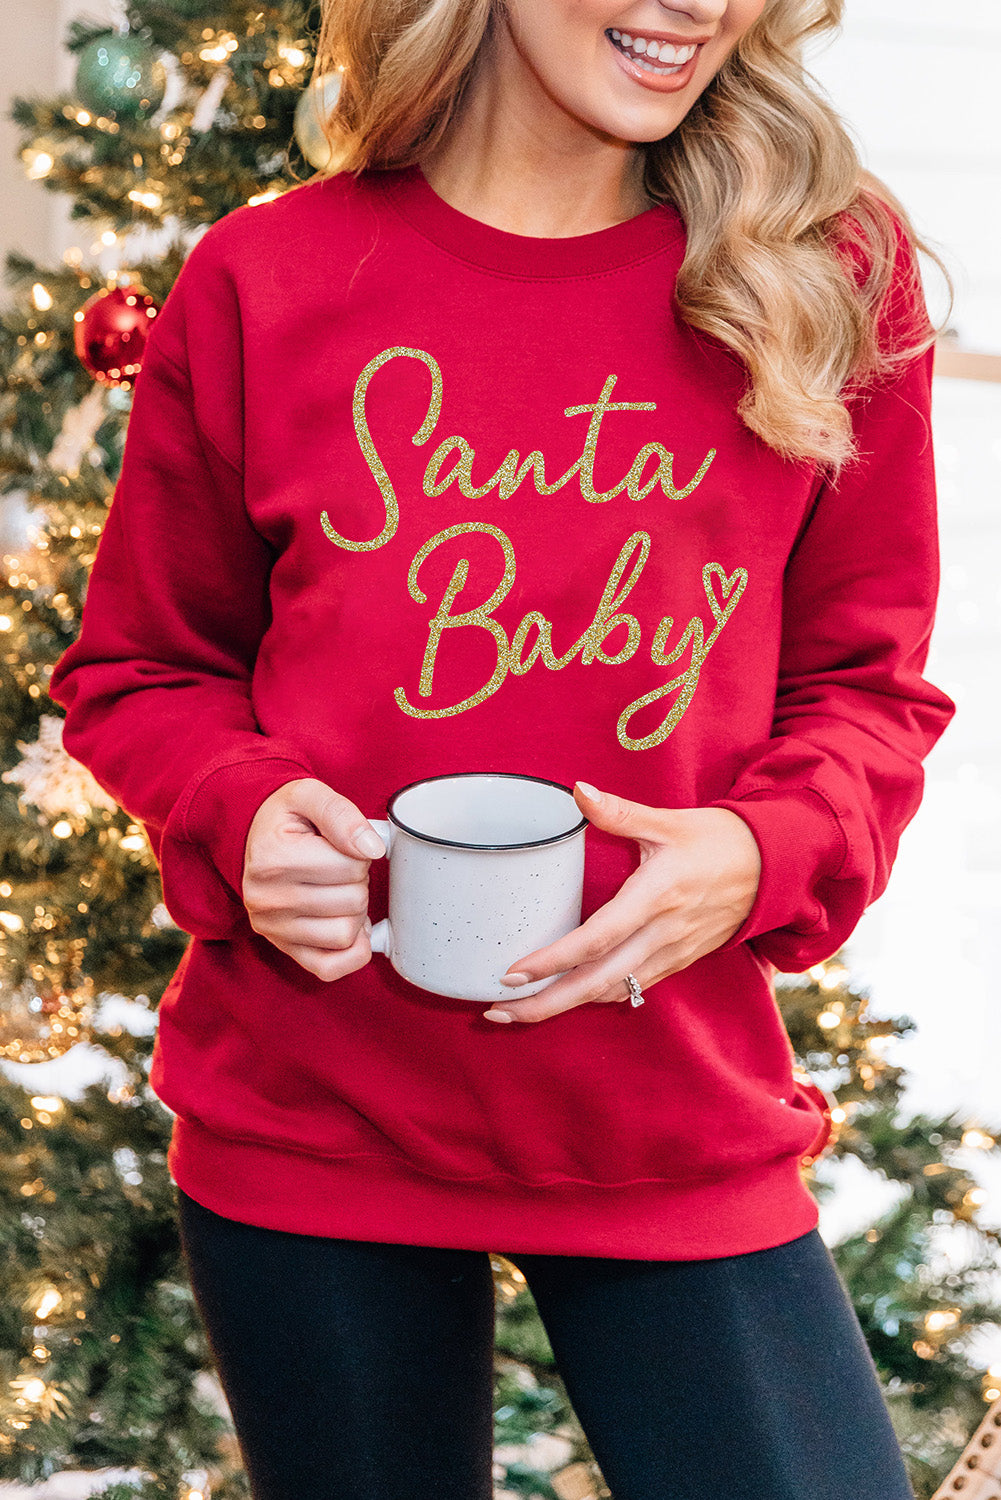 Fiery Red Santa Baby Letter Glitter Print Pullover Sweatshirt Graphic Sweatshirts JT's Designer Fashion